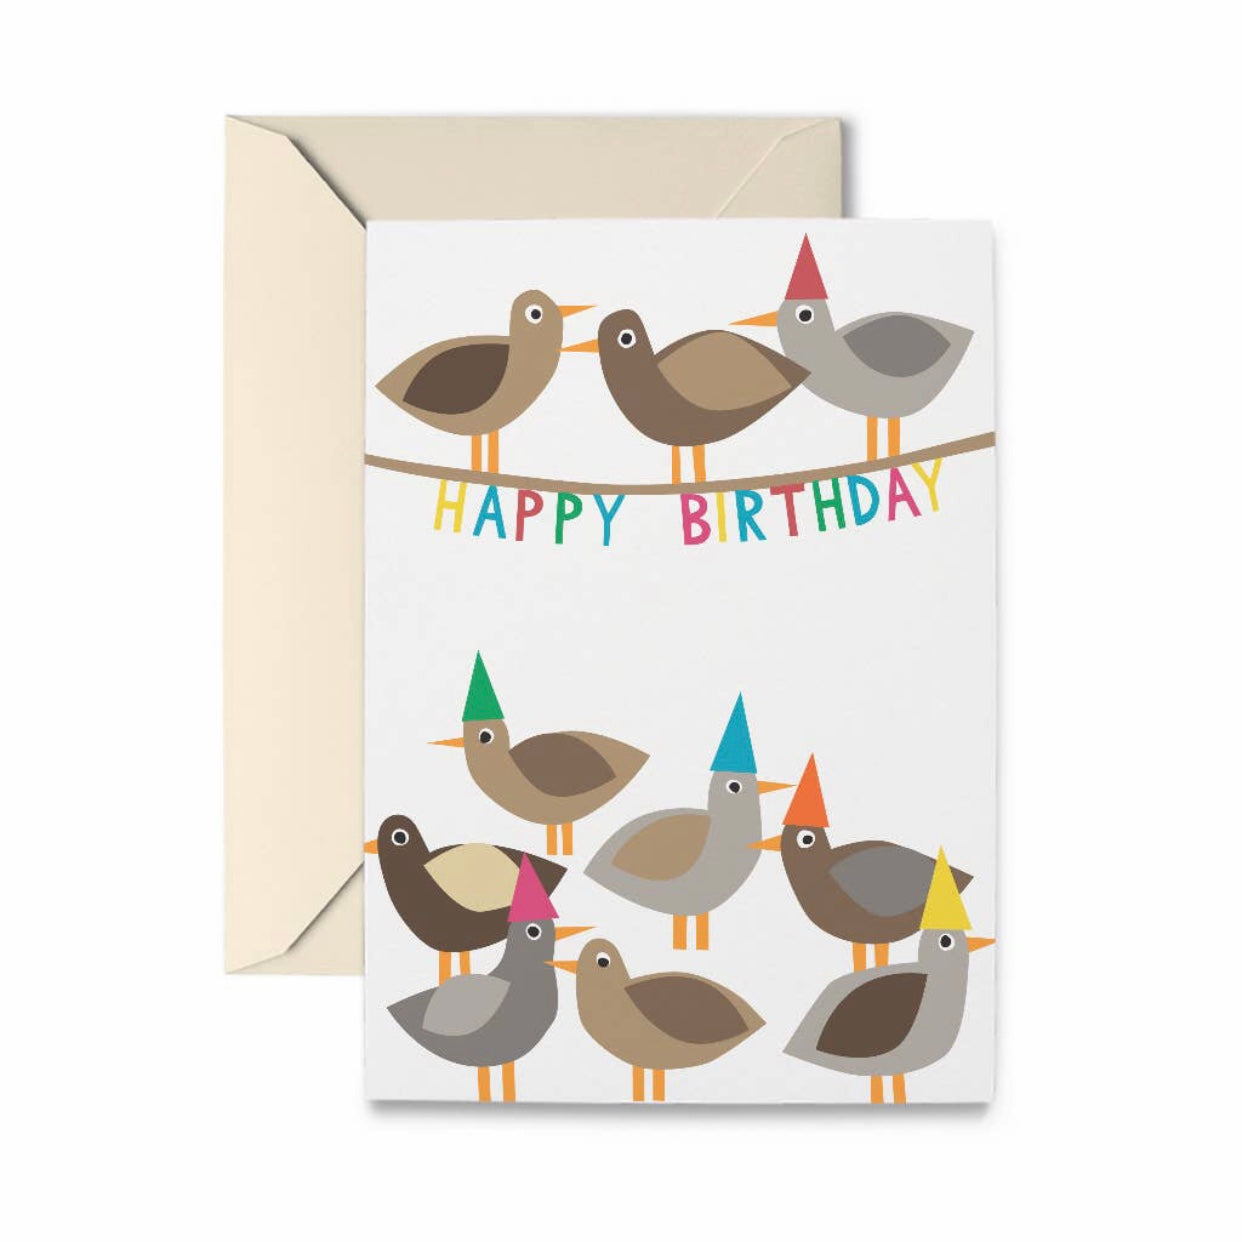 Happy Birthday birds greeting card